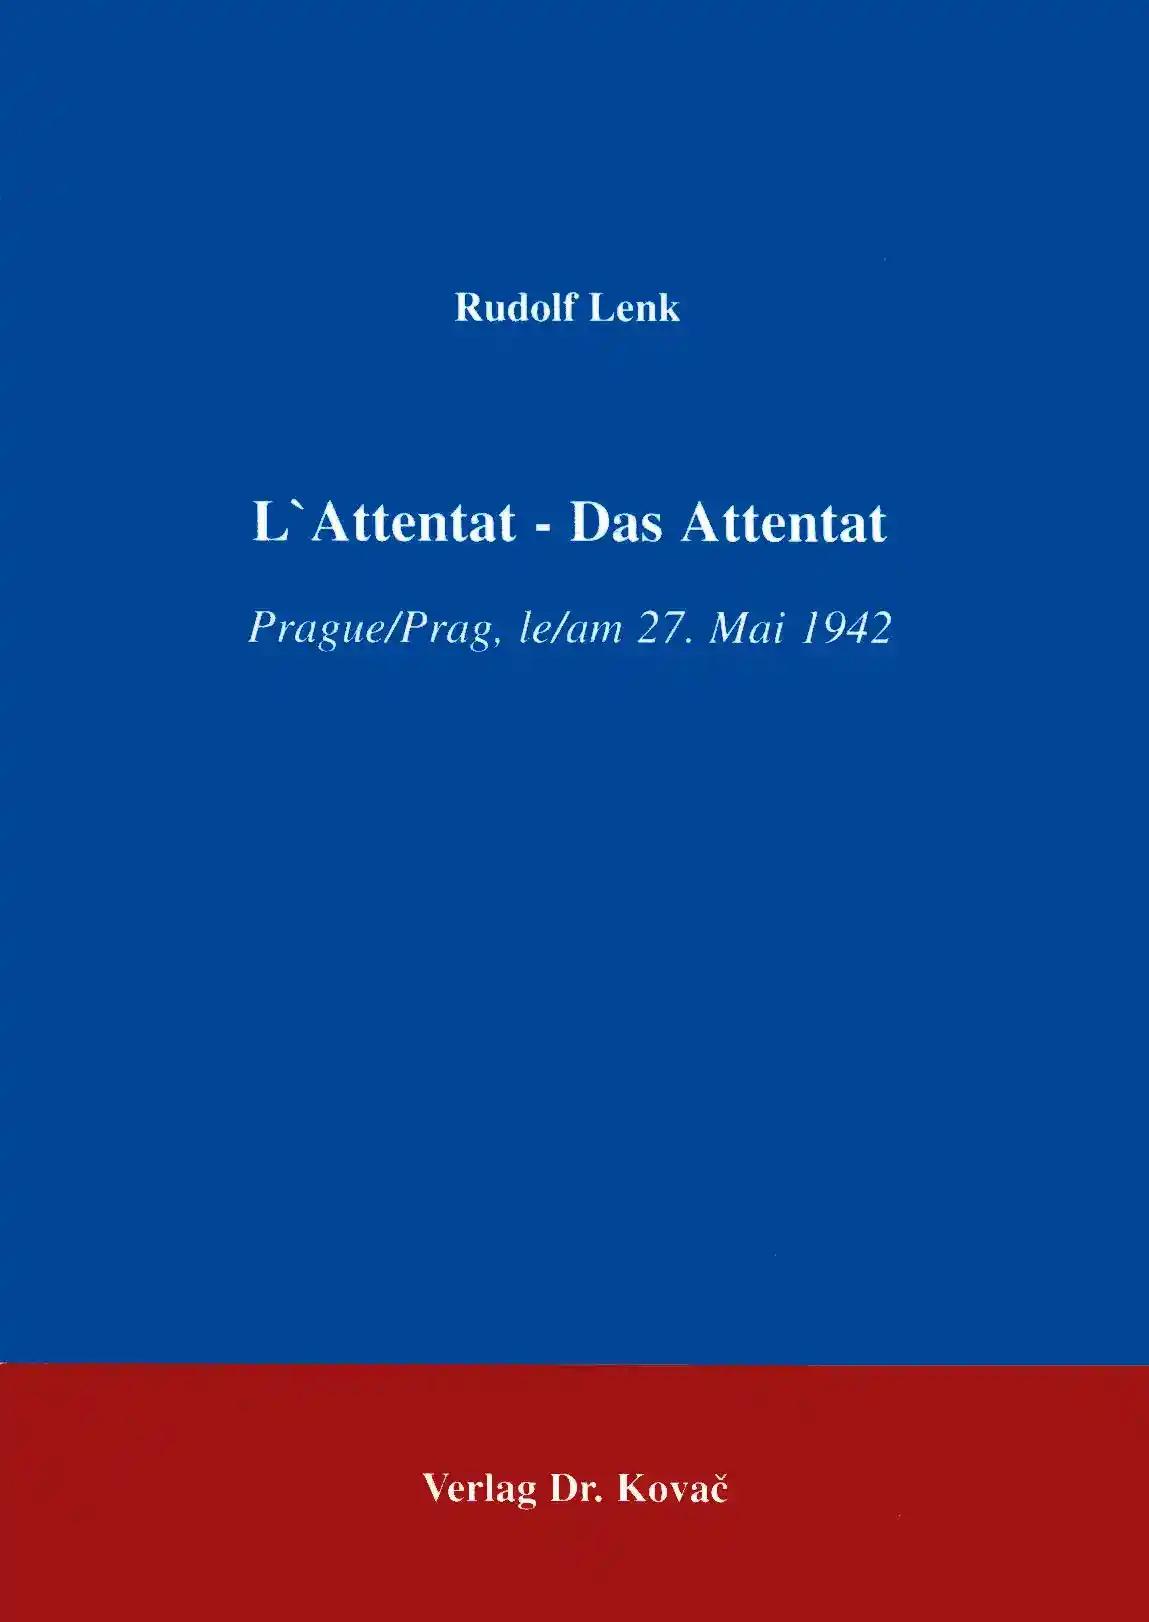 L'Attentat - Das Attentat, Prague/Prag, le/am 27. Mai 1942 - Rudolf Lenk